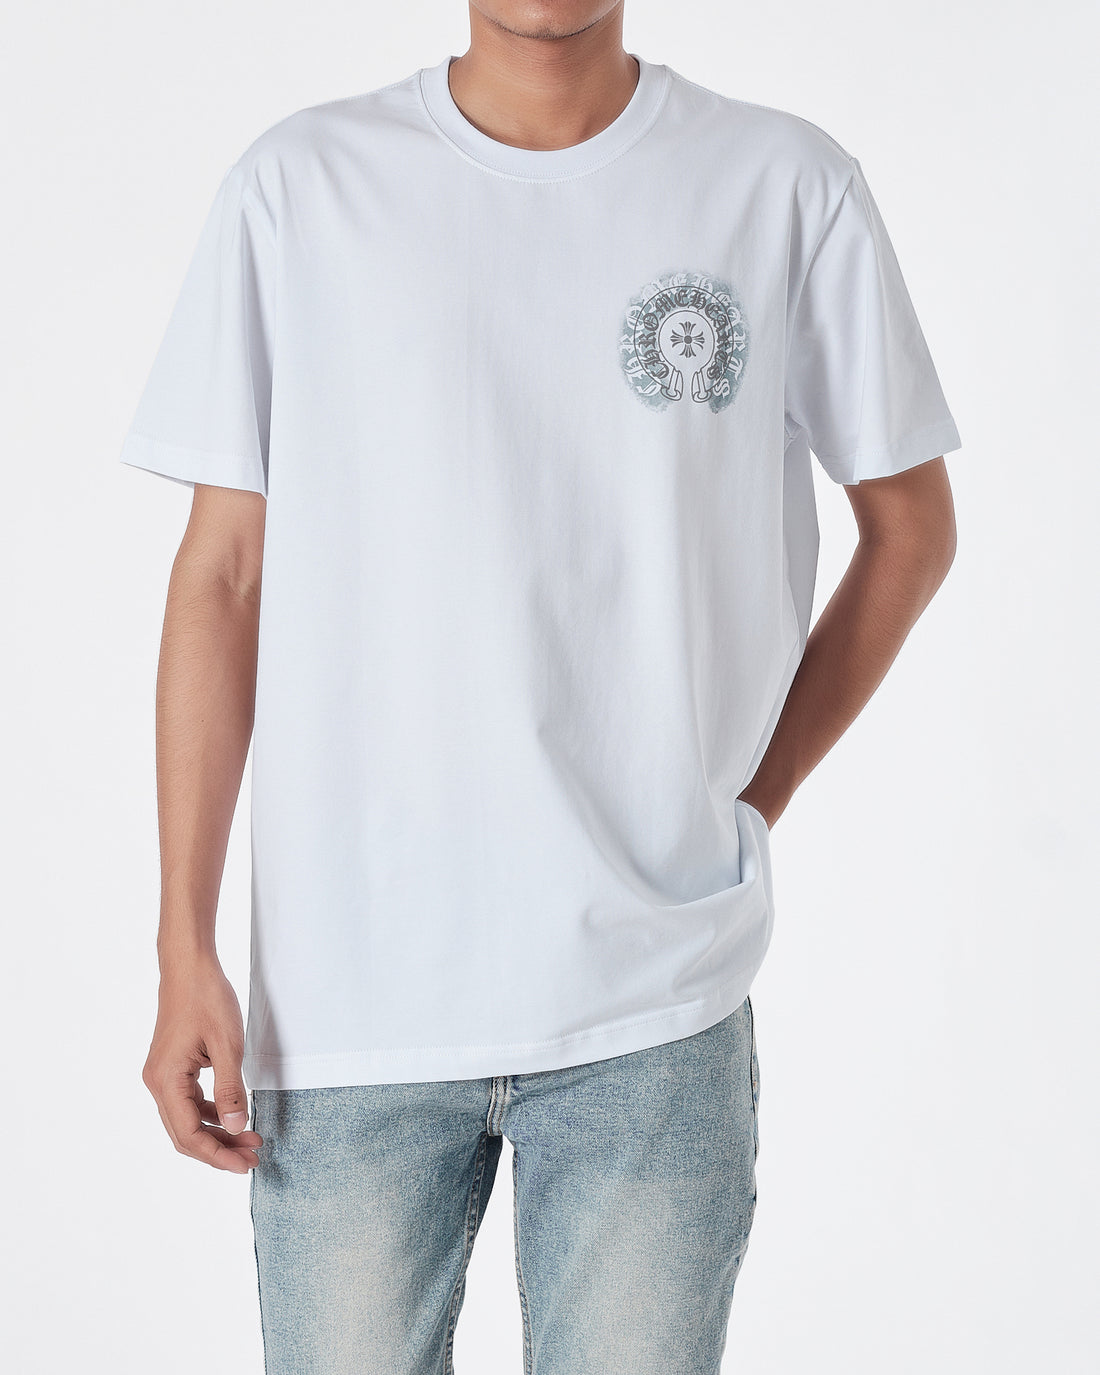 CH Cross Back Logo Printed Men White T-Shirt 15.90